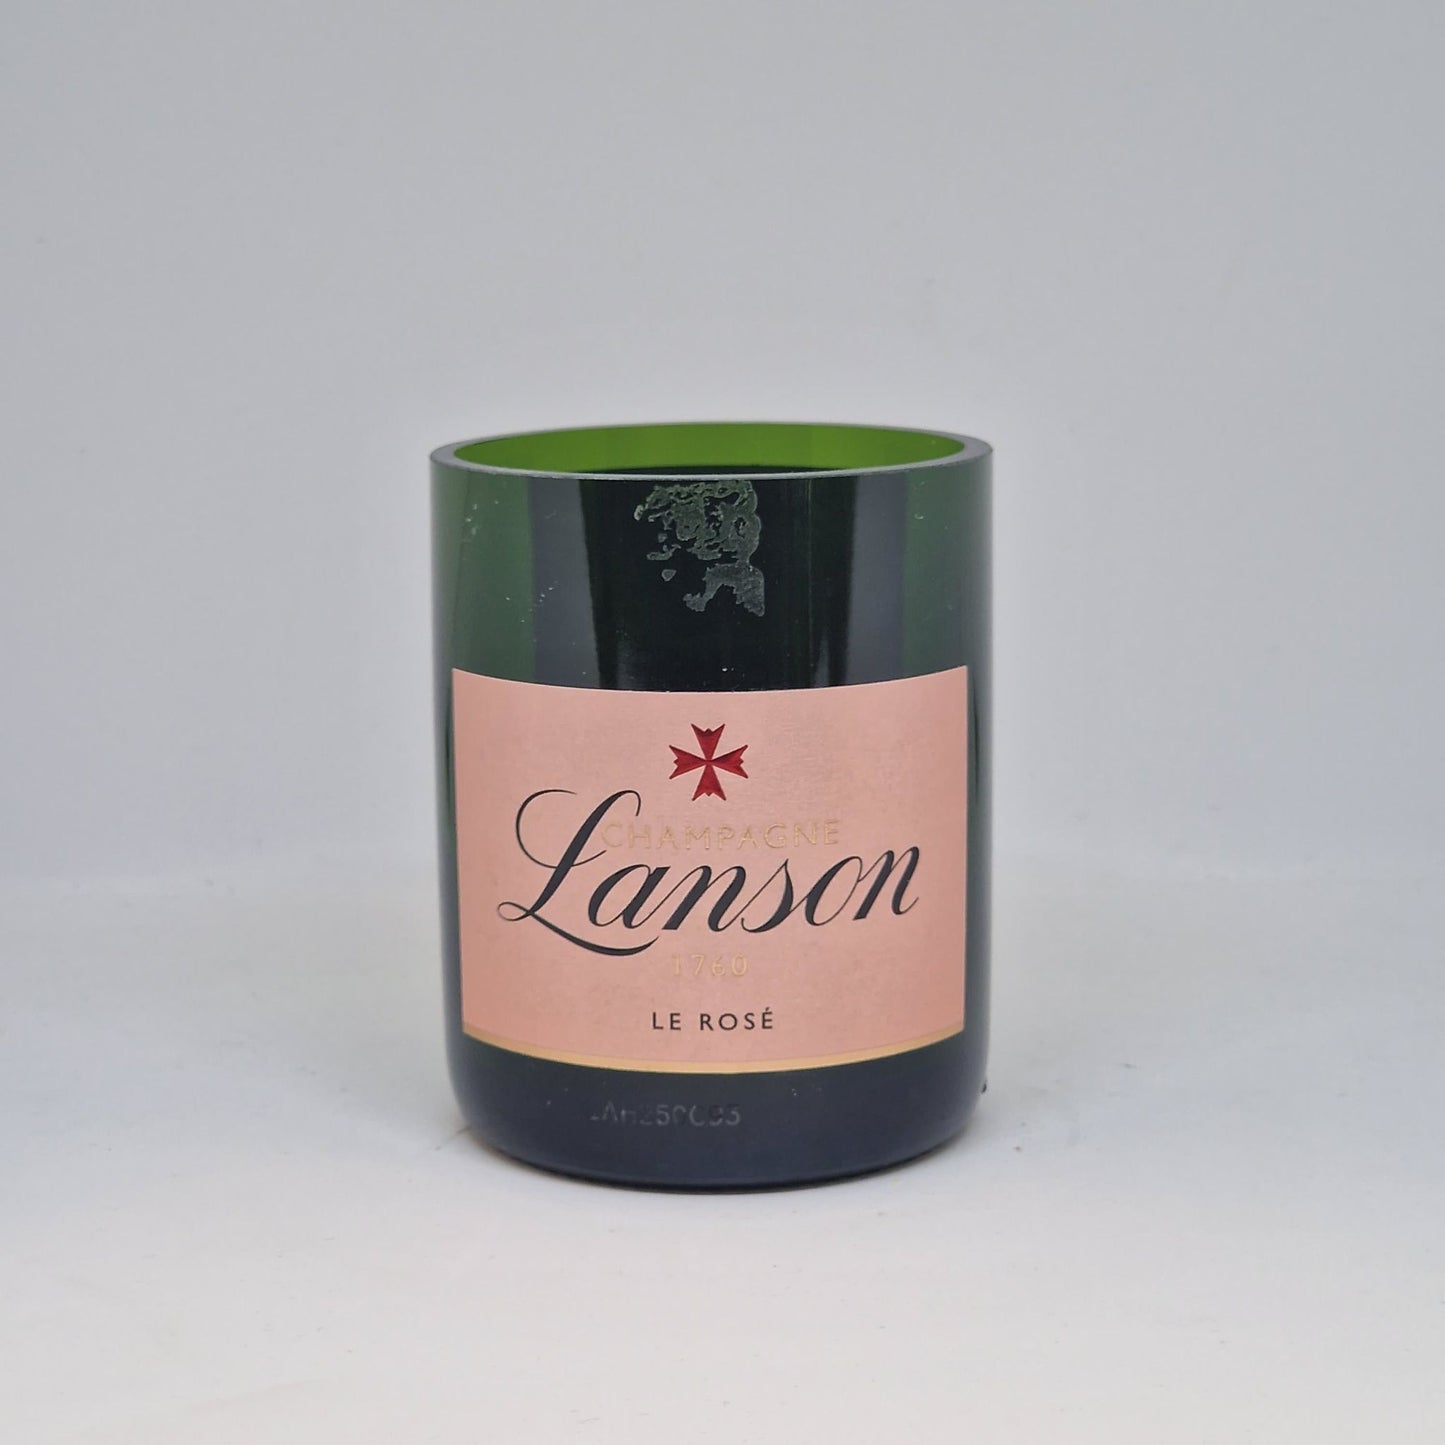 Lanson Le Rose Champagne Bottle Candle